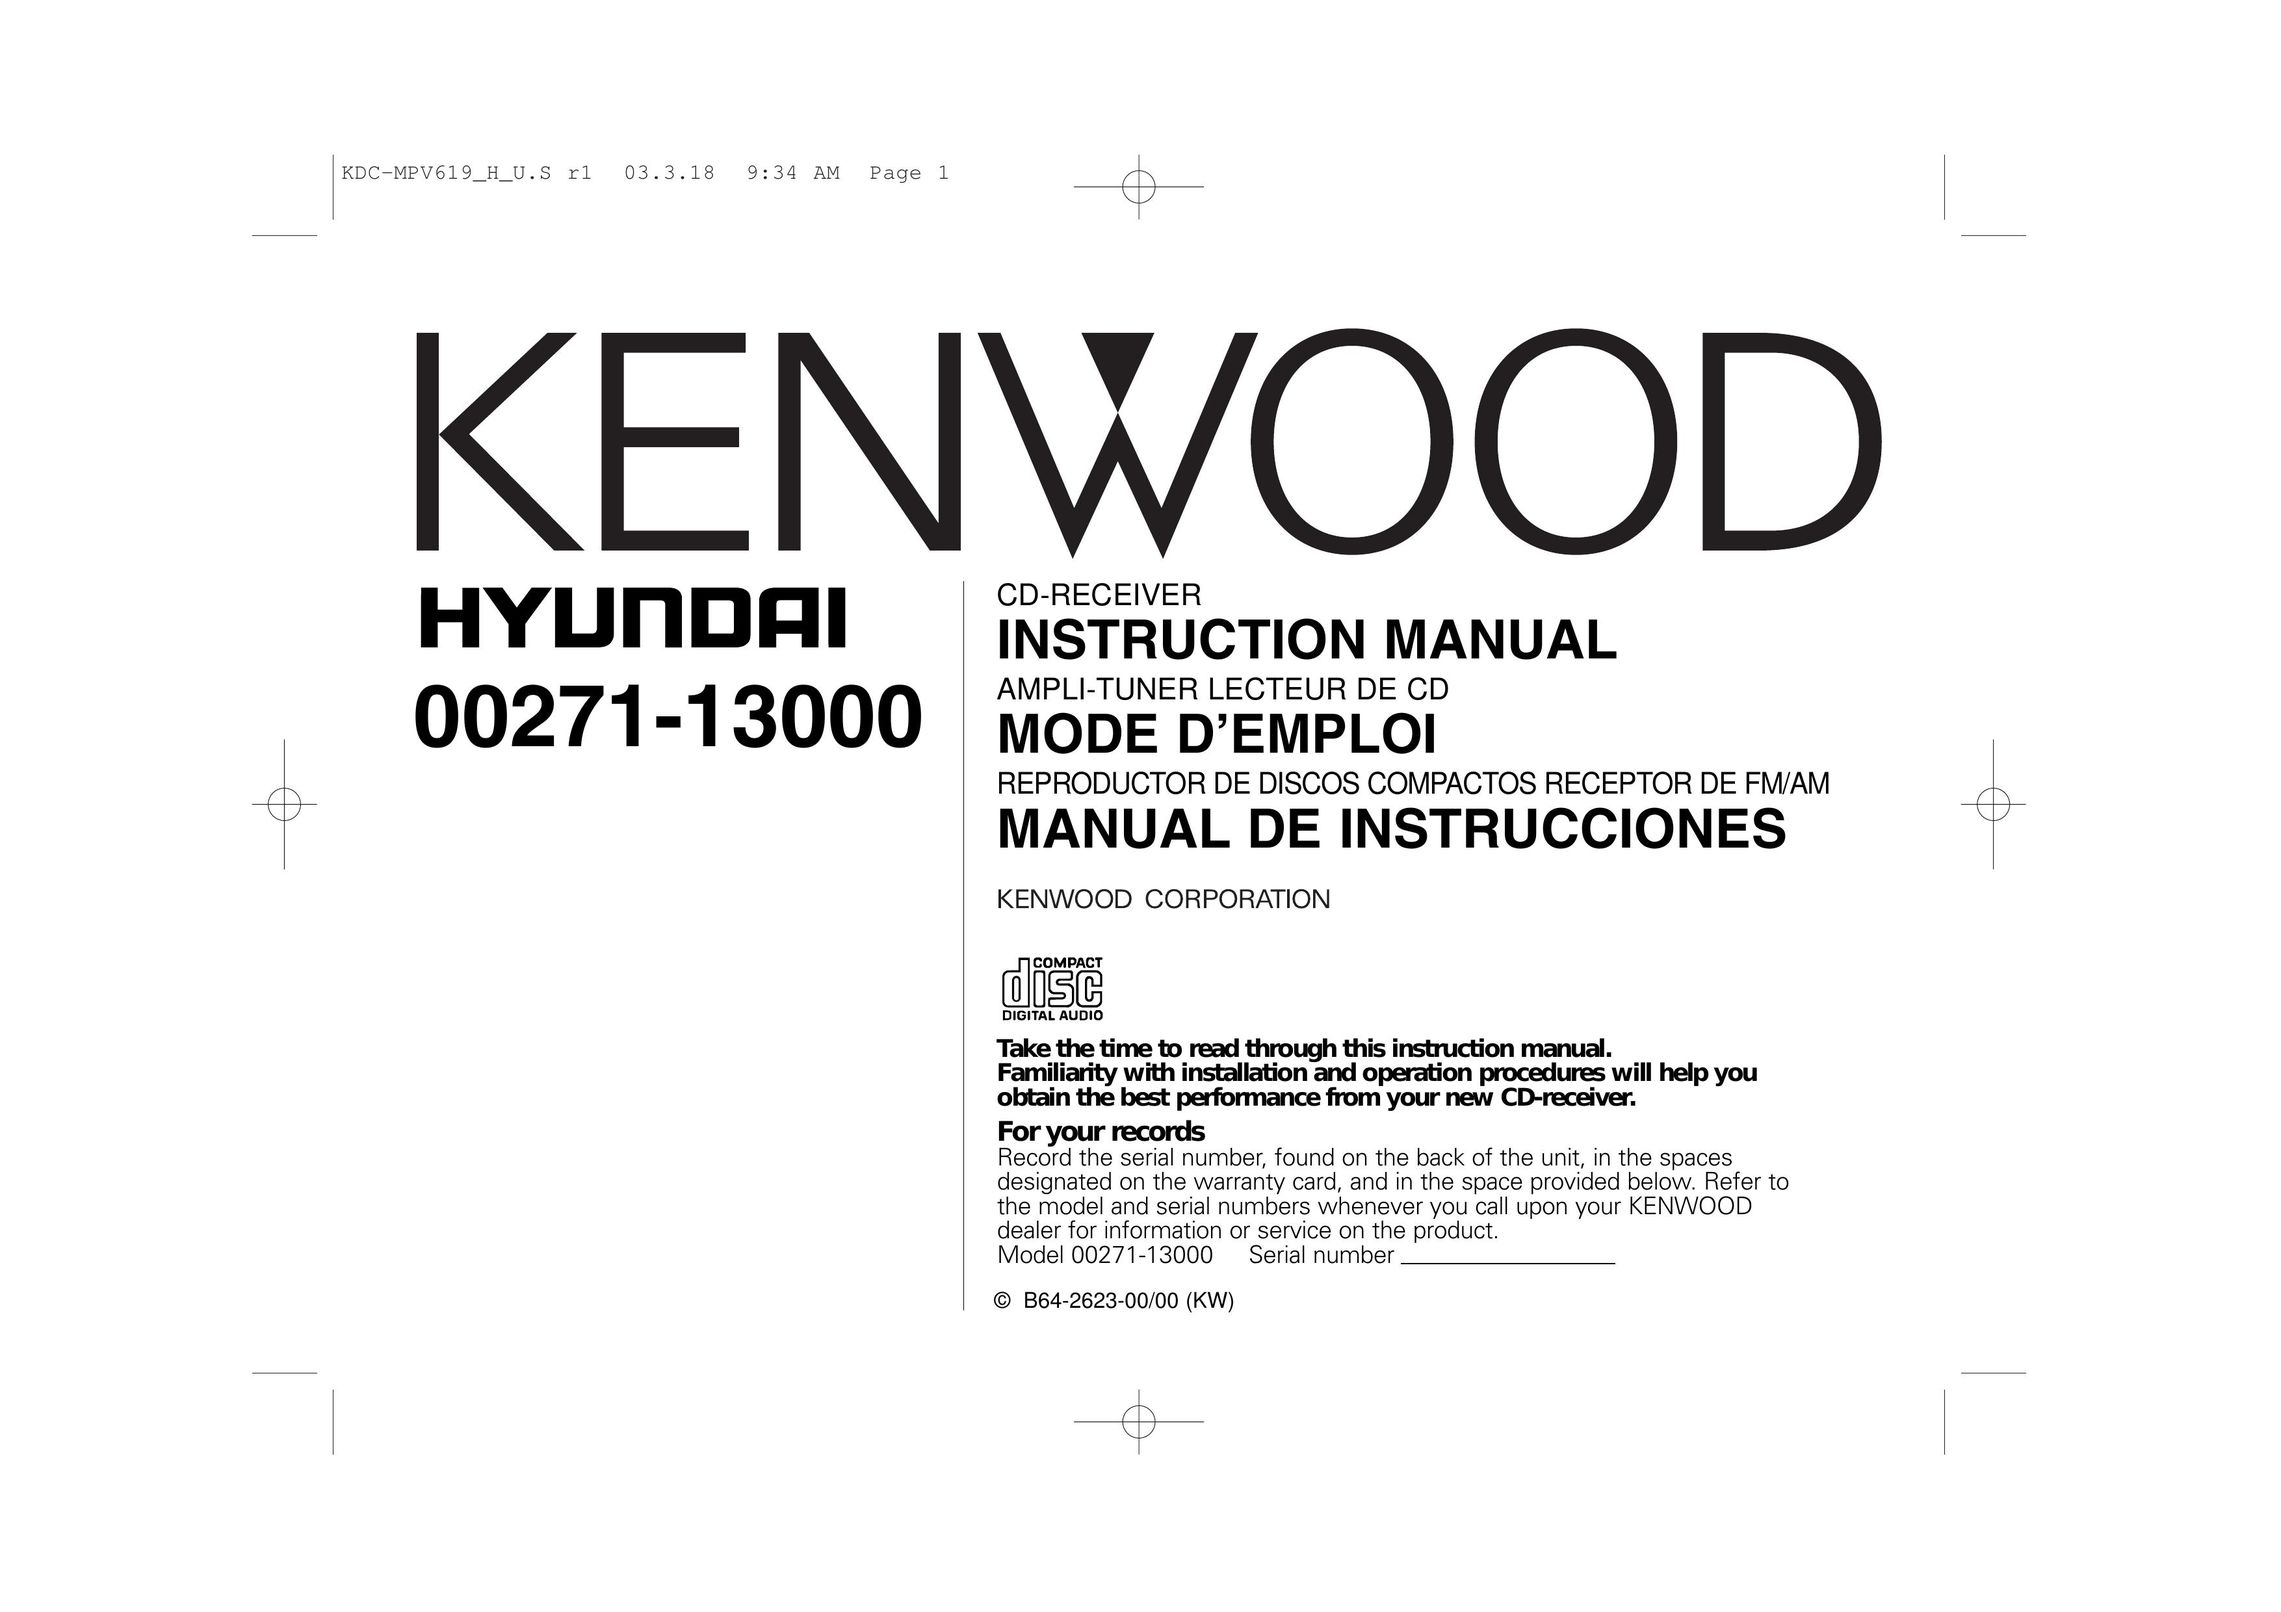 Kenwood CD Receiver CD Player User Manual